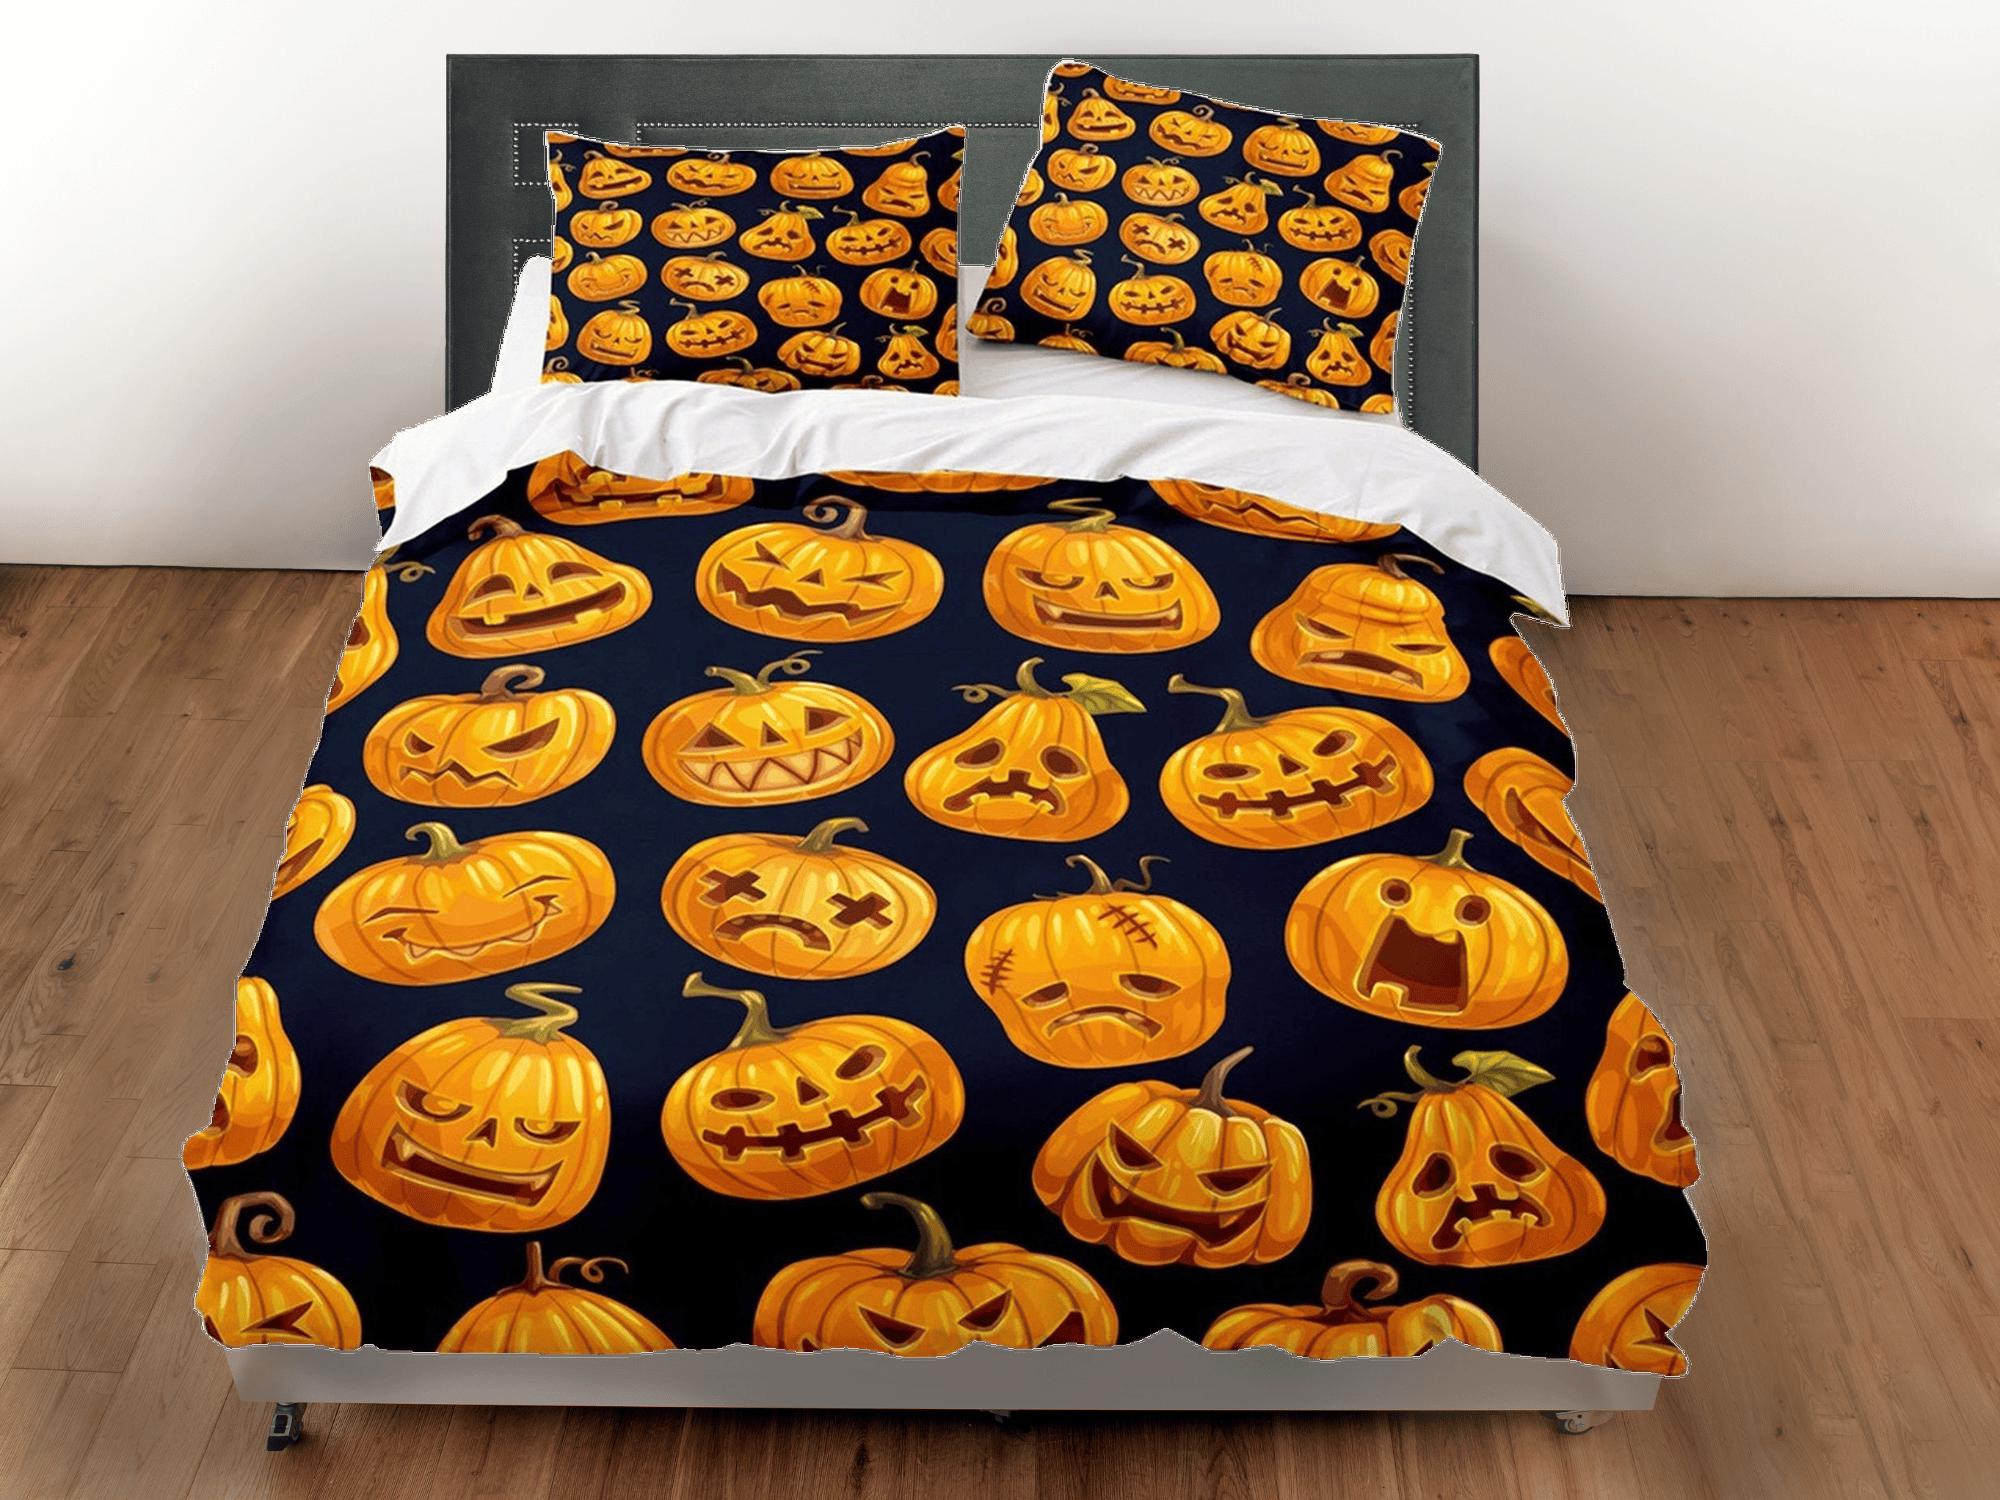 daintyduvet Various facial expressions of pumpkins halloween bedding & pillowcase, duvet cover dorm bedding, nursery toddler bedding, halloween gift